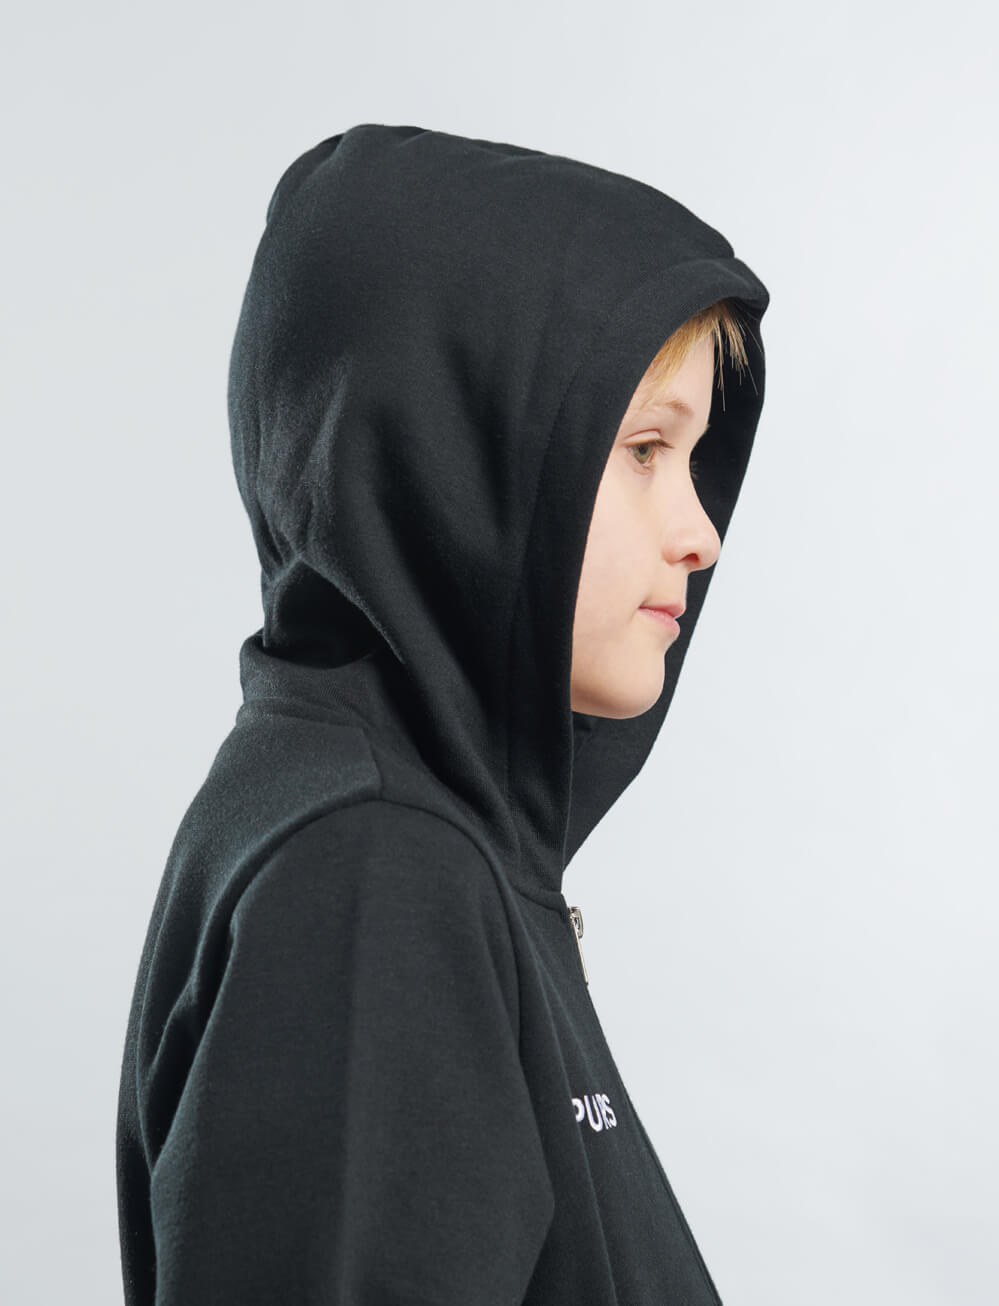 Official Tottenham Kids Full Zip Hoodie - Black - The World Football Store